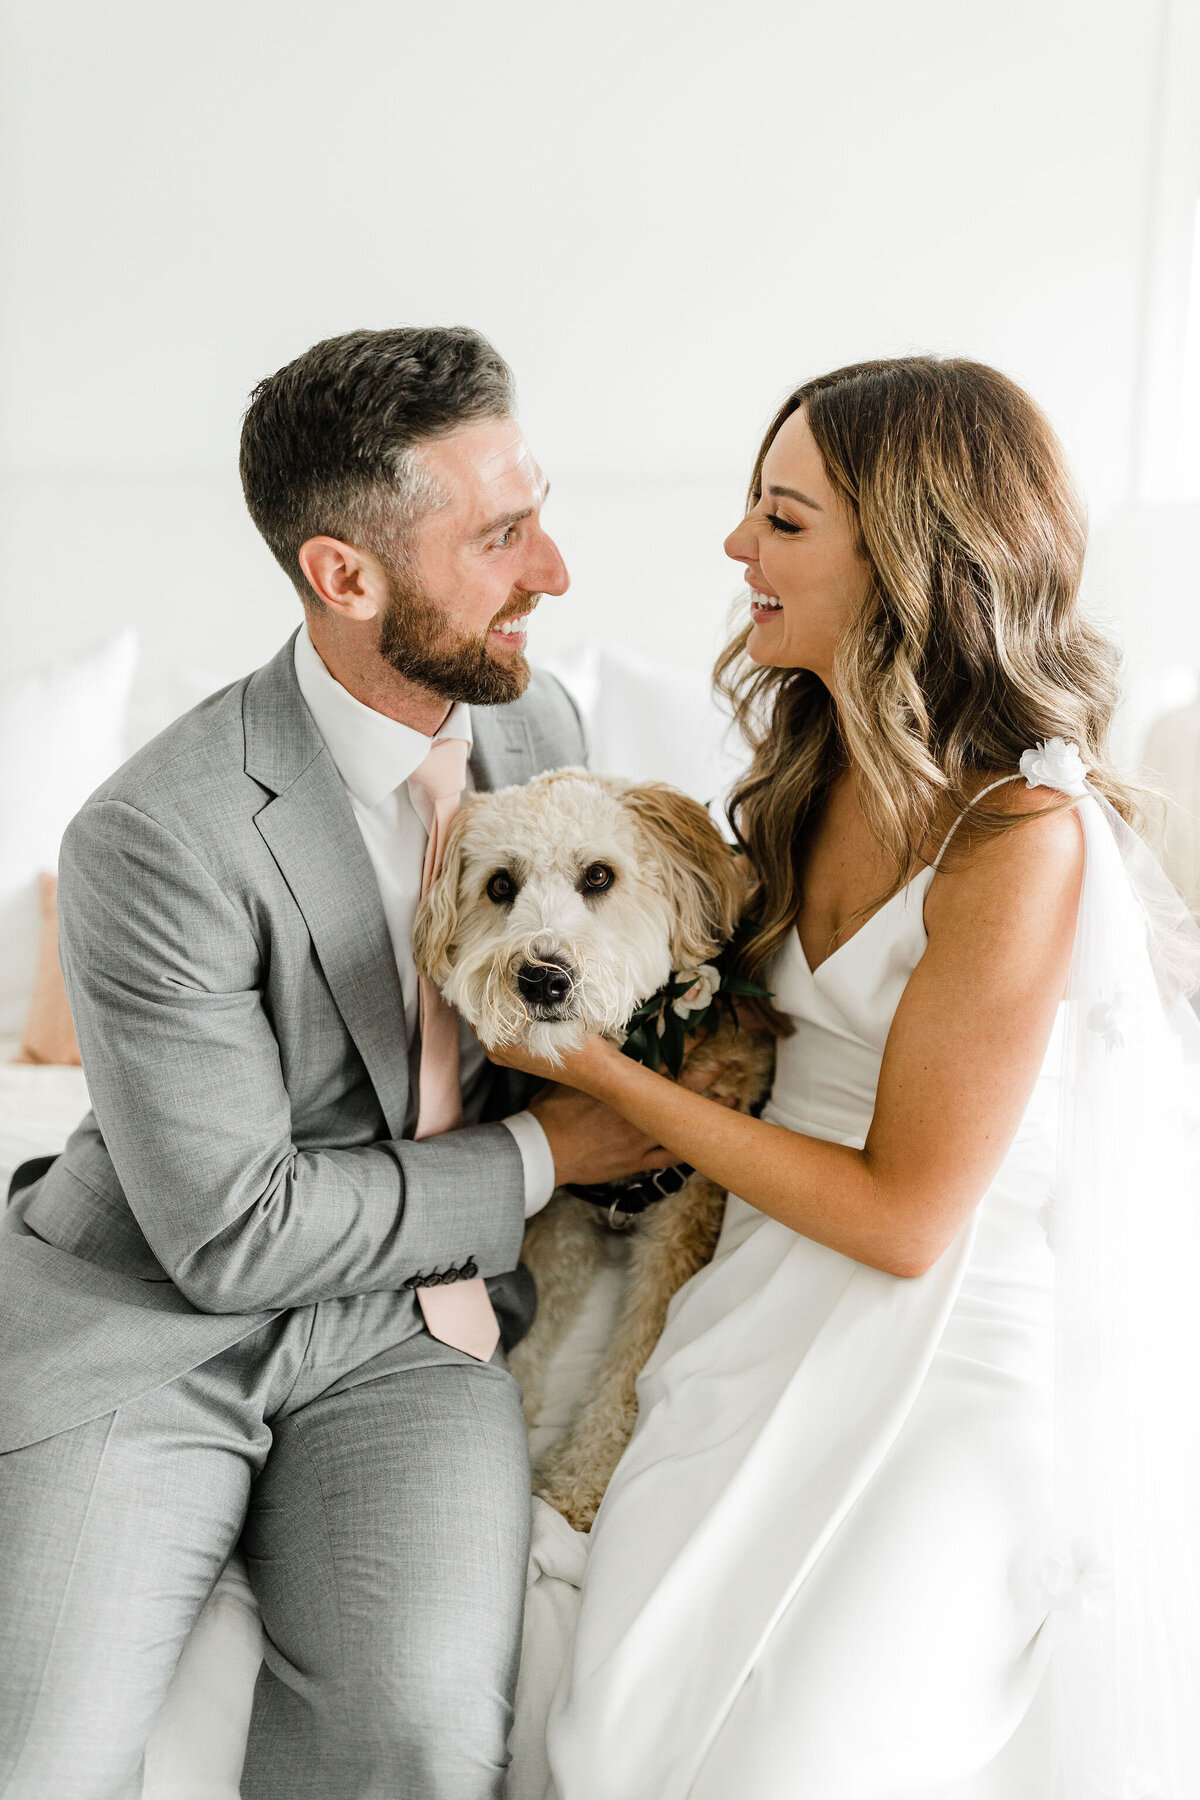 Wedding Photos with their dog